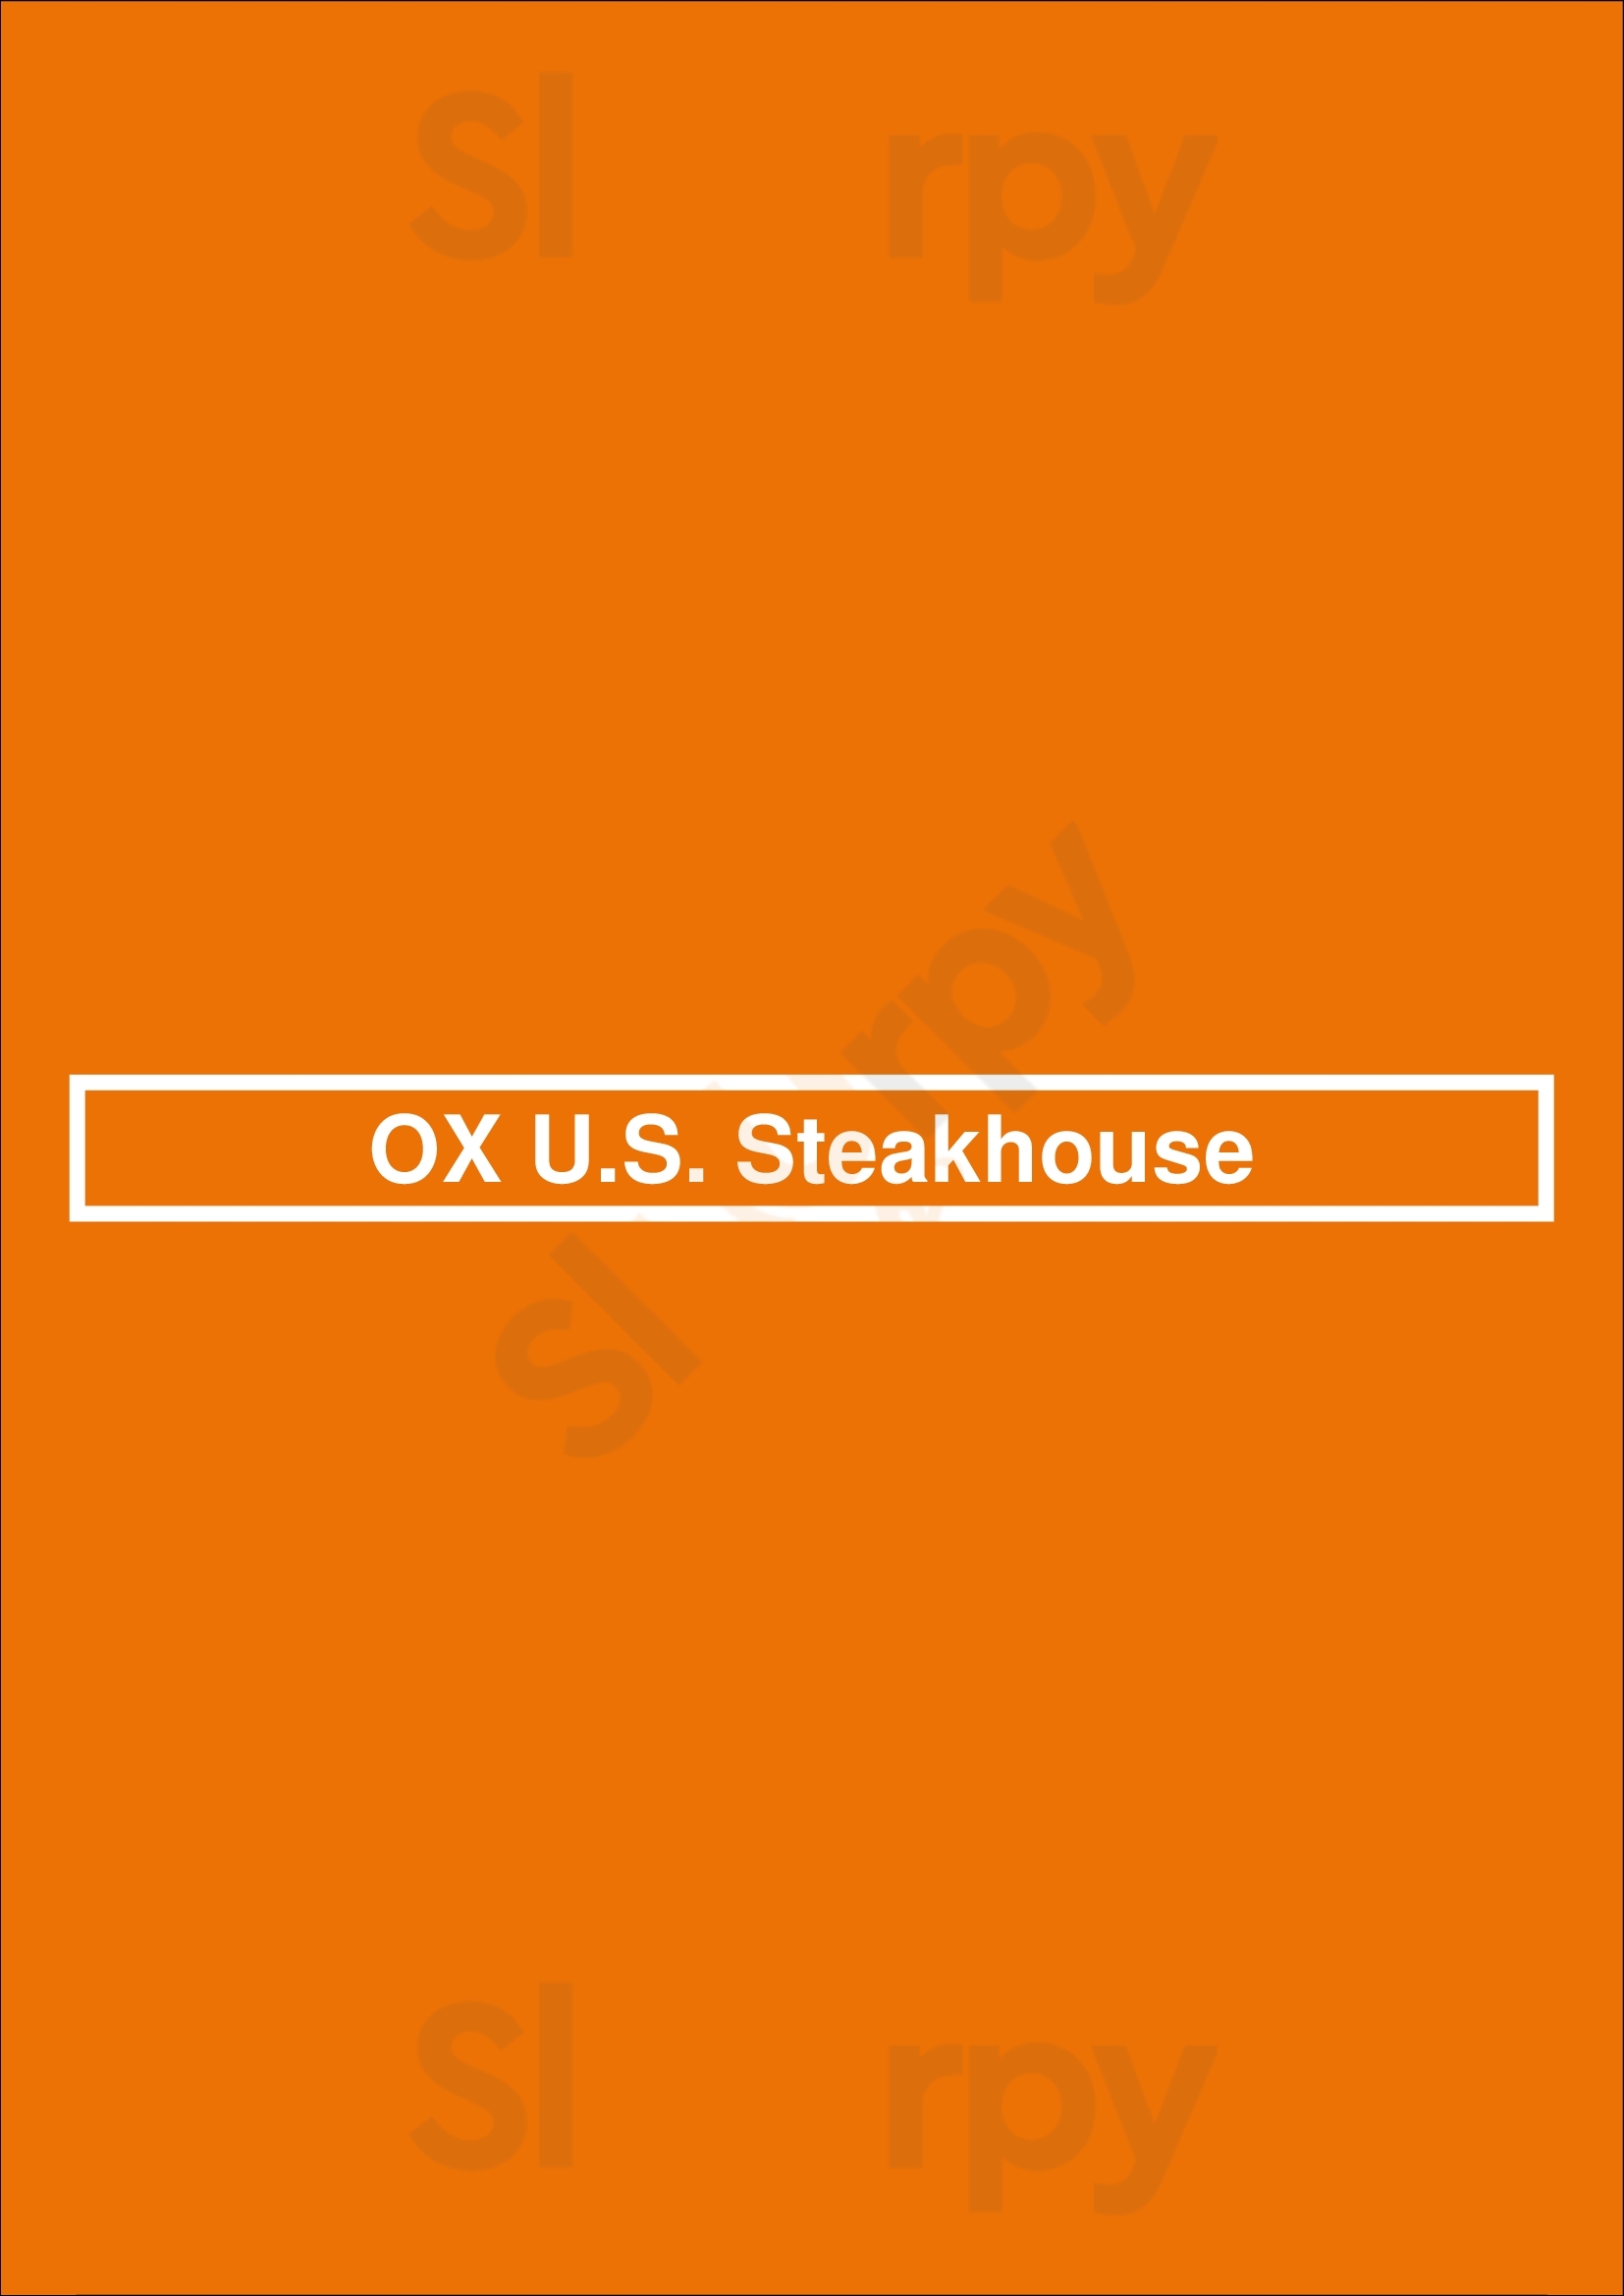 Ox U.s. Steakhouse Braunschweig Menu - 1